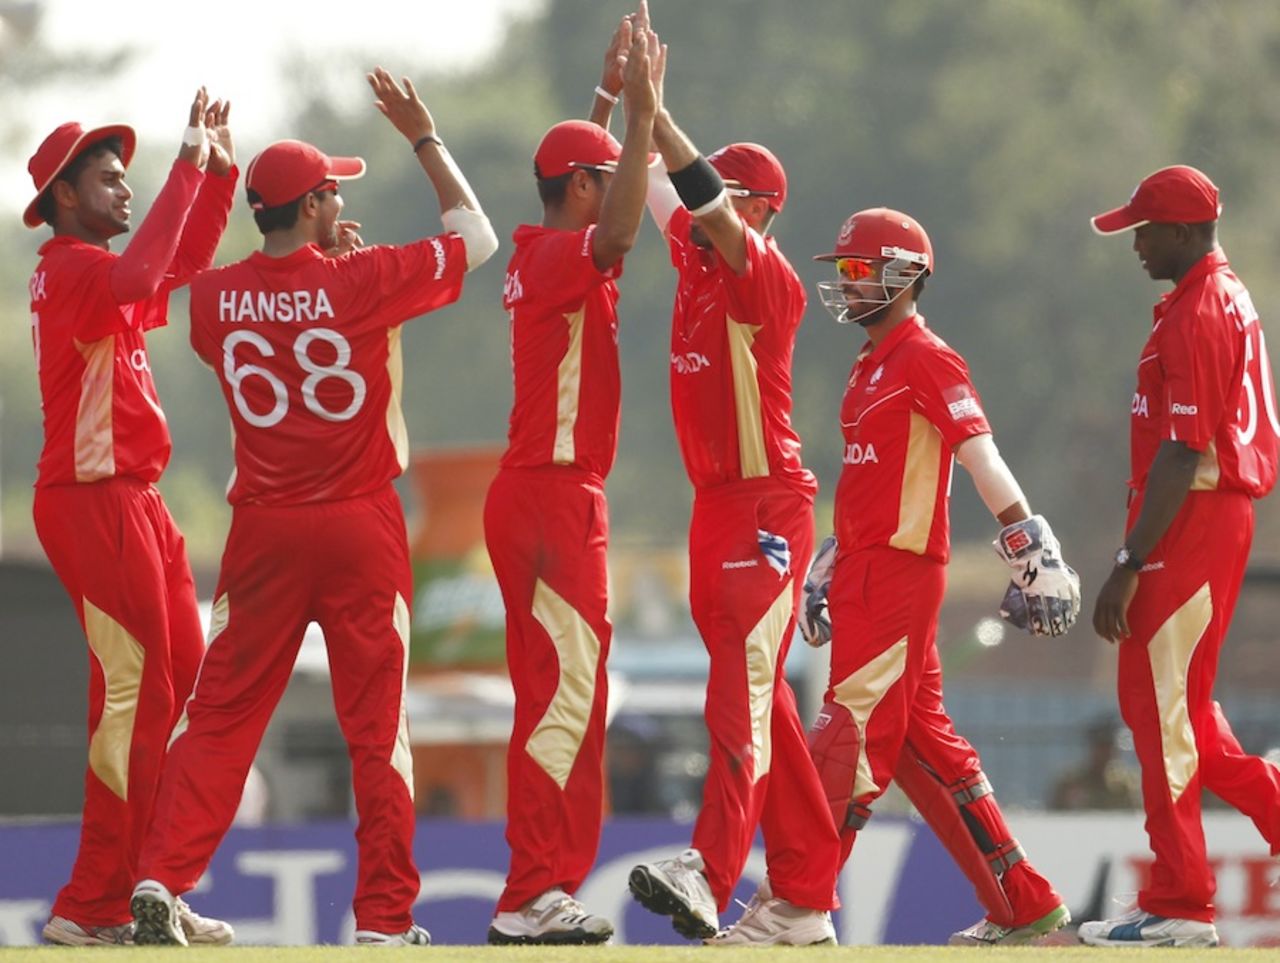 Canada celebrate a rare wicket, Sri Lanka v Canada, Group A, World Cup 2011, Hambantota, February 20, 2011